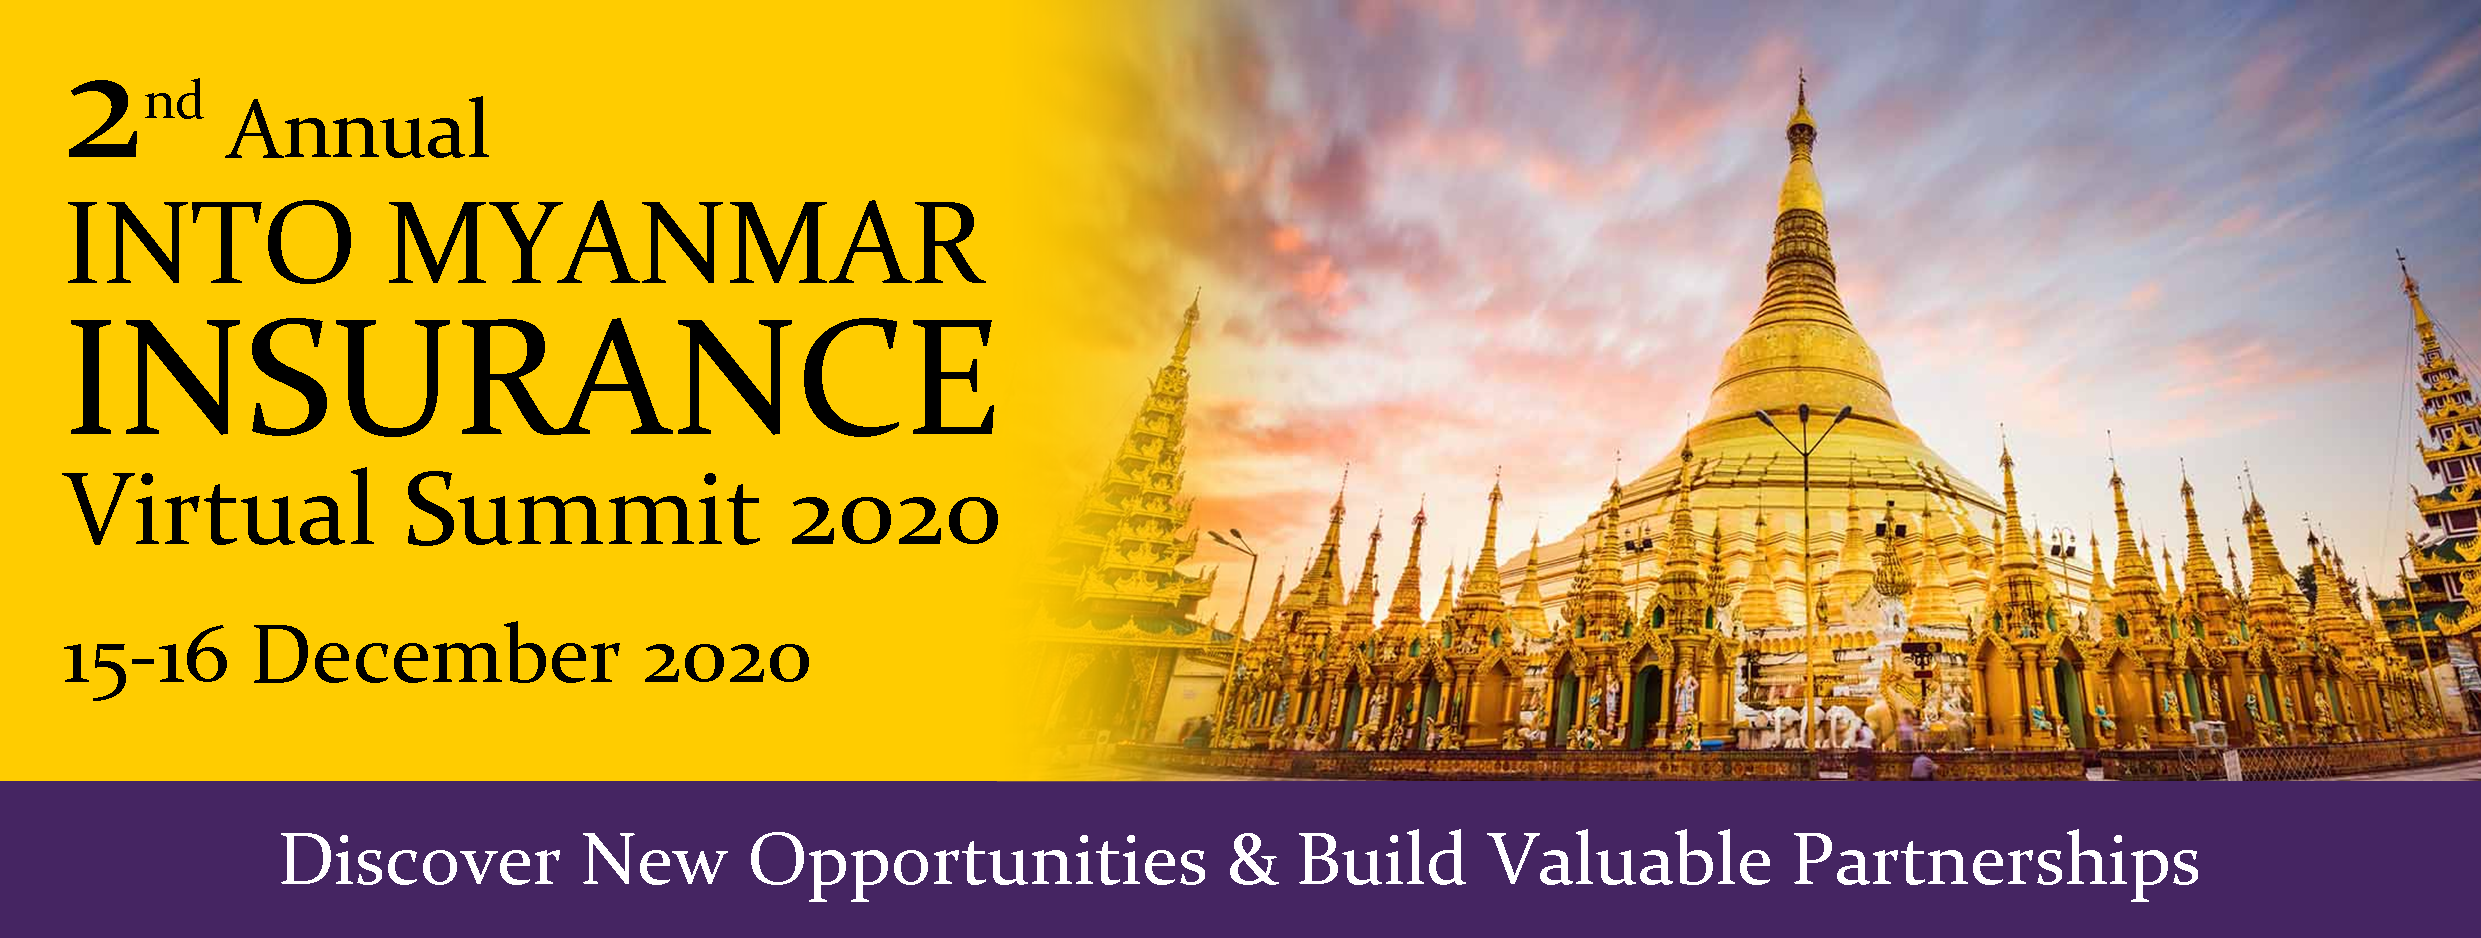 2nd Annual Into Myanmar Insurance Virtual Summit 2020